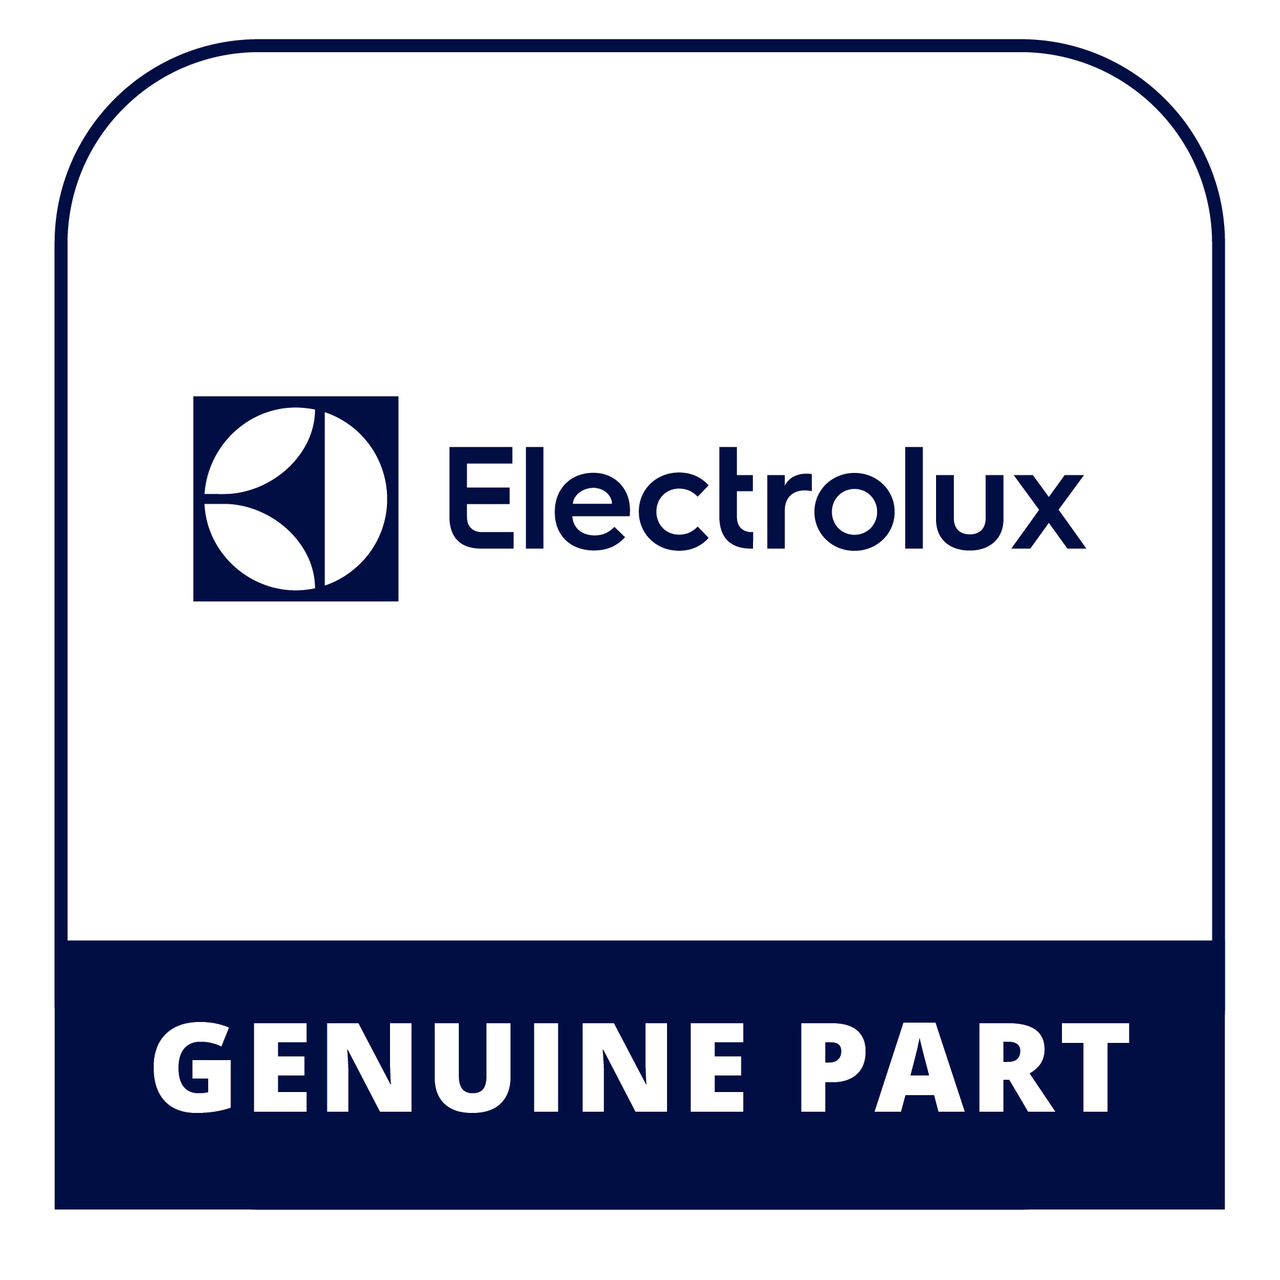 Frigidaire - Electrolux 136808930 Gasket - Genuine Electrolux Part